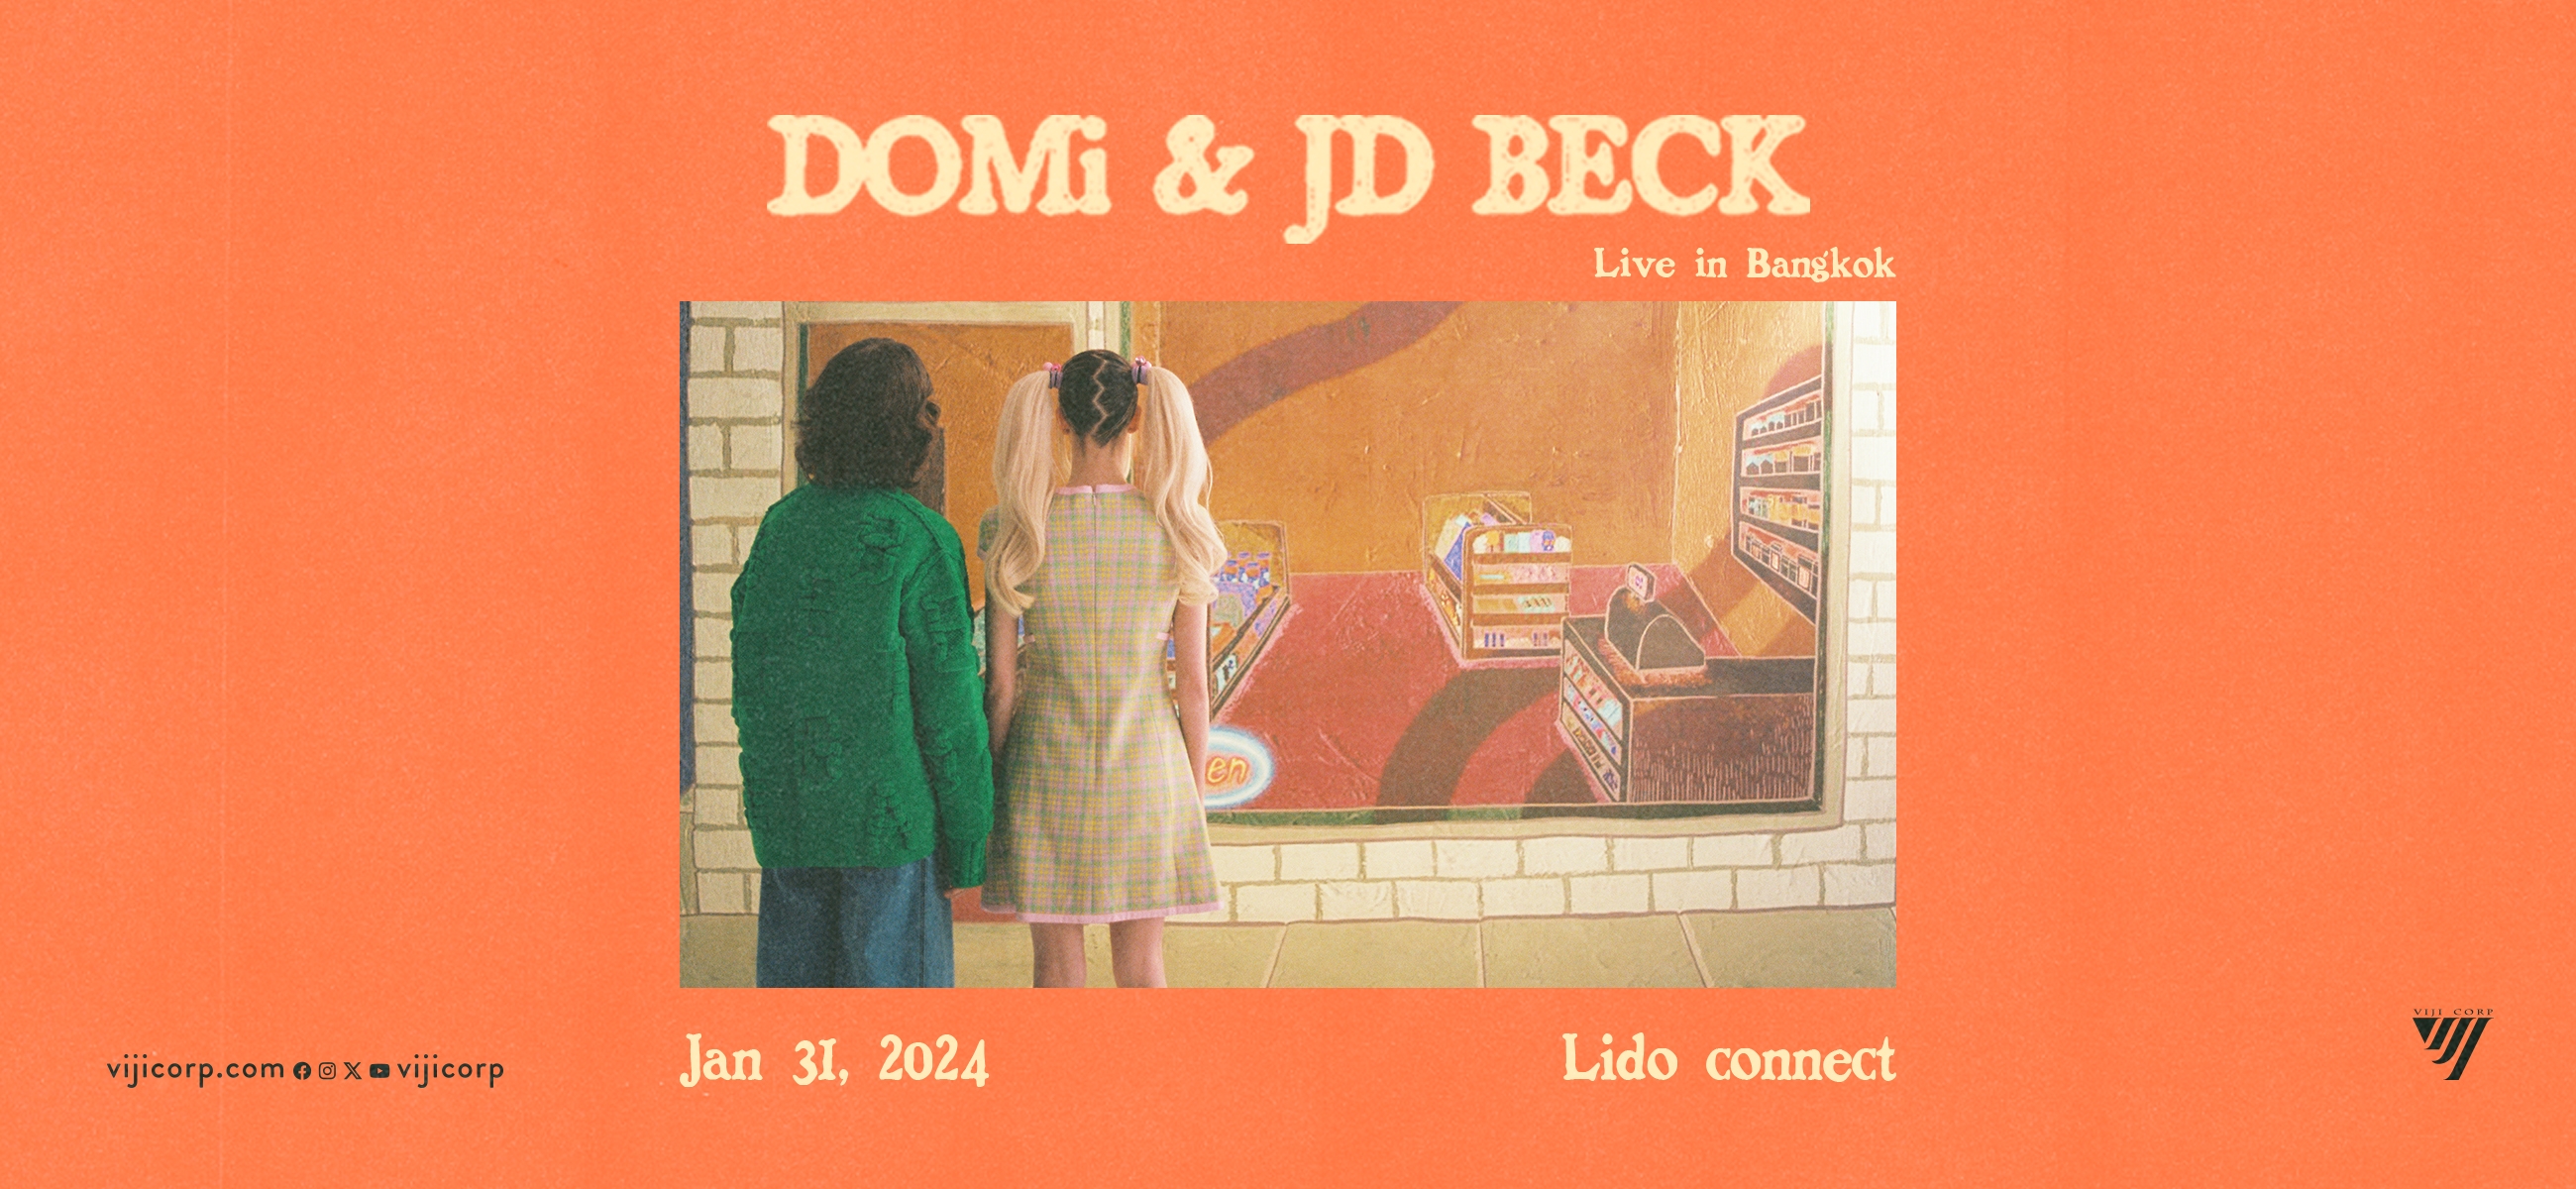 DOMi & JD BECK live in Bangkok